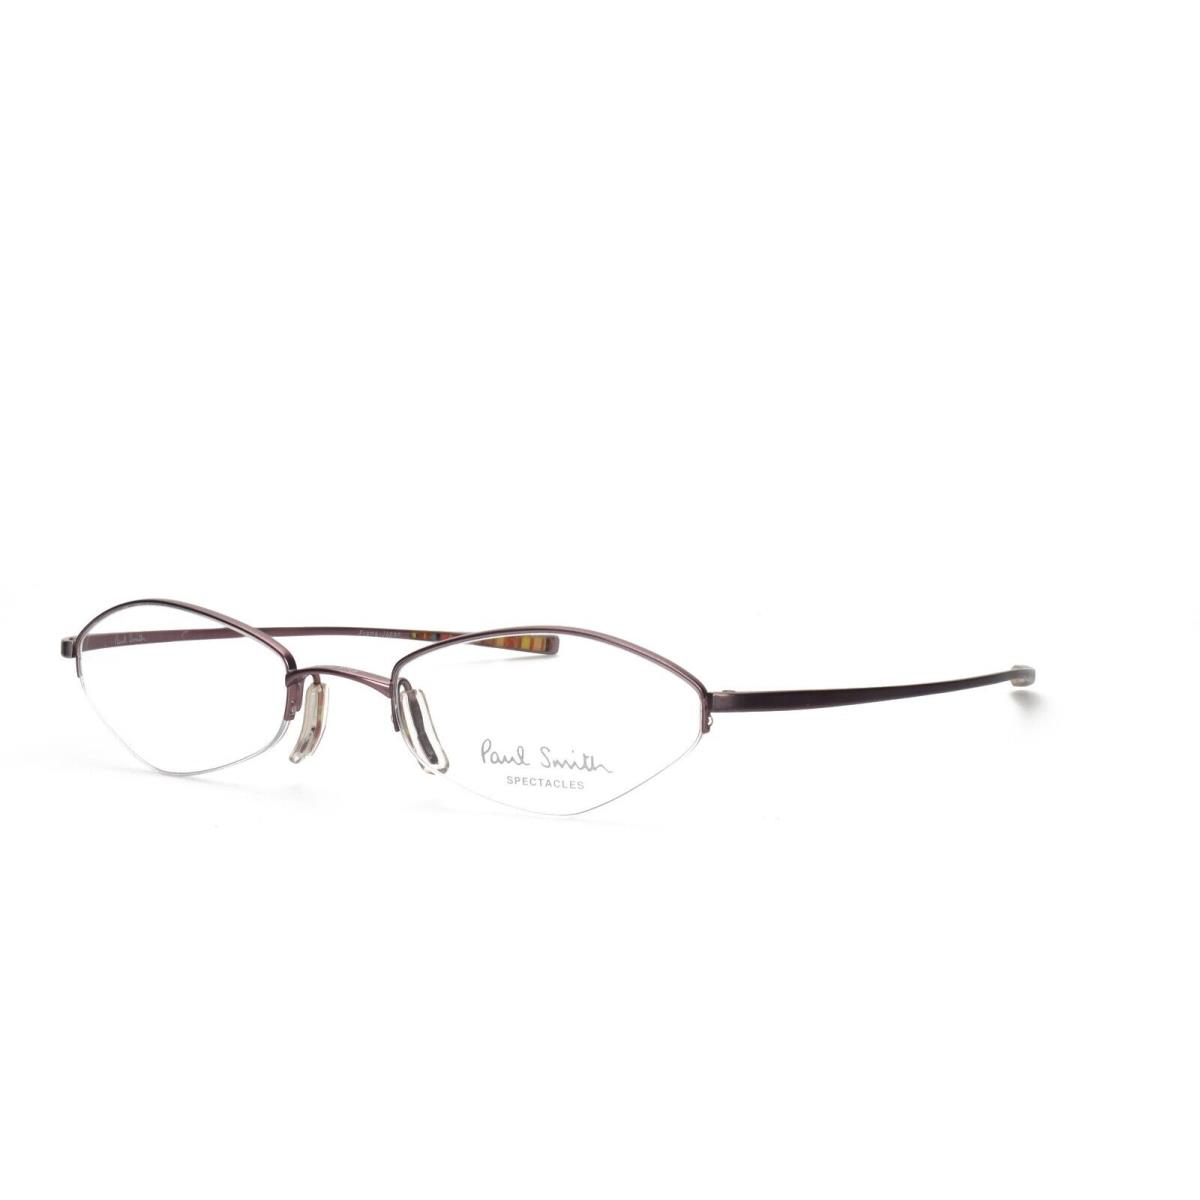 Paul Smith 179 VR 46-19-140 Metallic Red Vtg Vintage Eyeglasses Frames